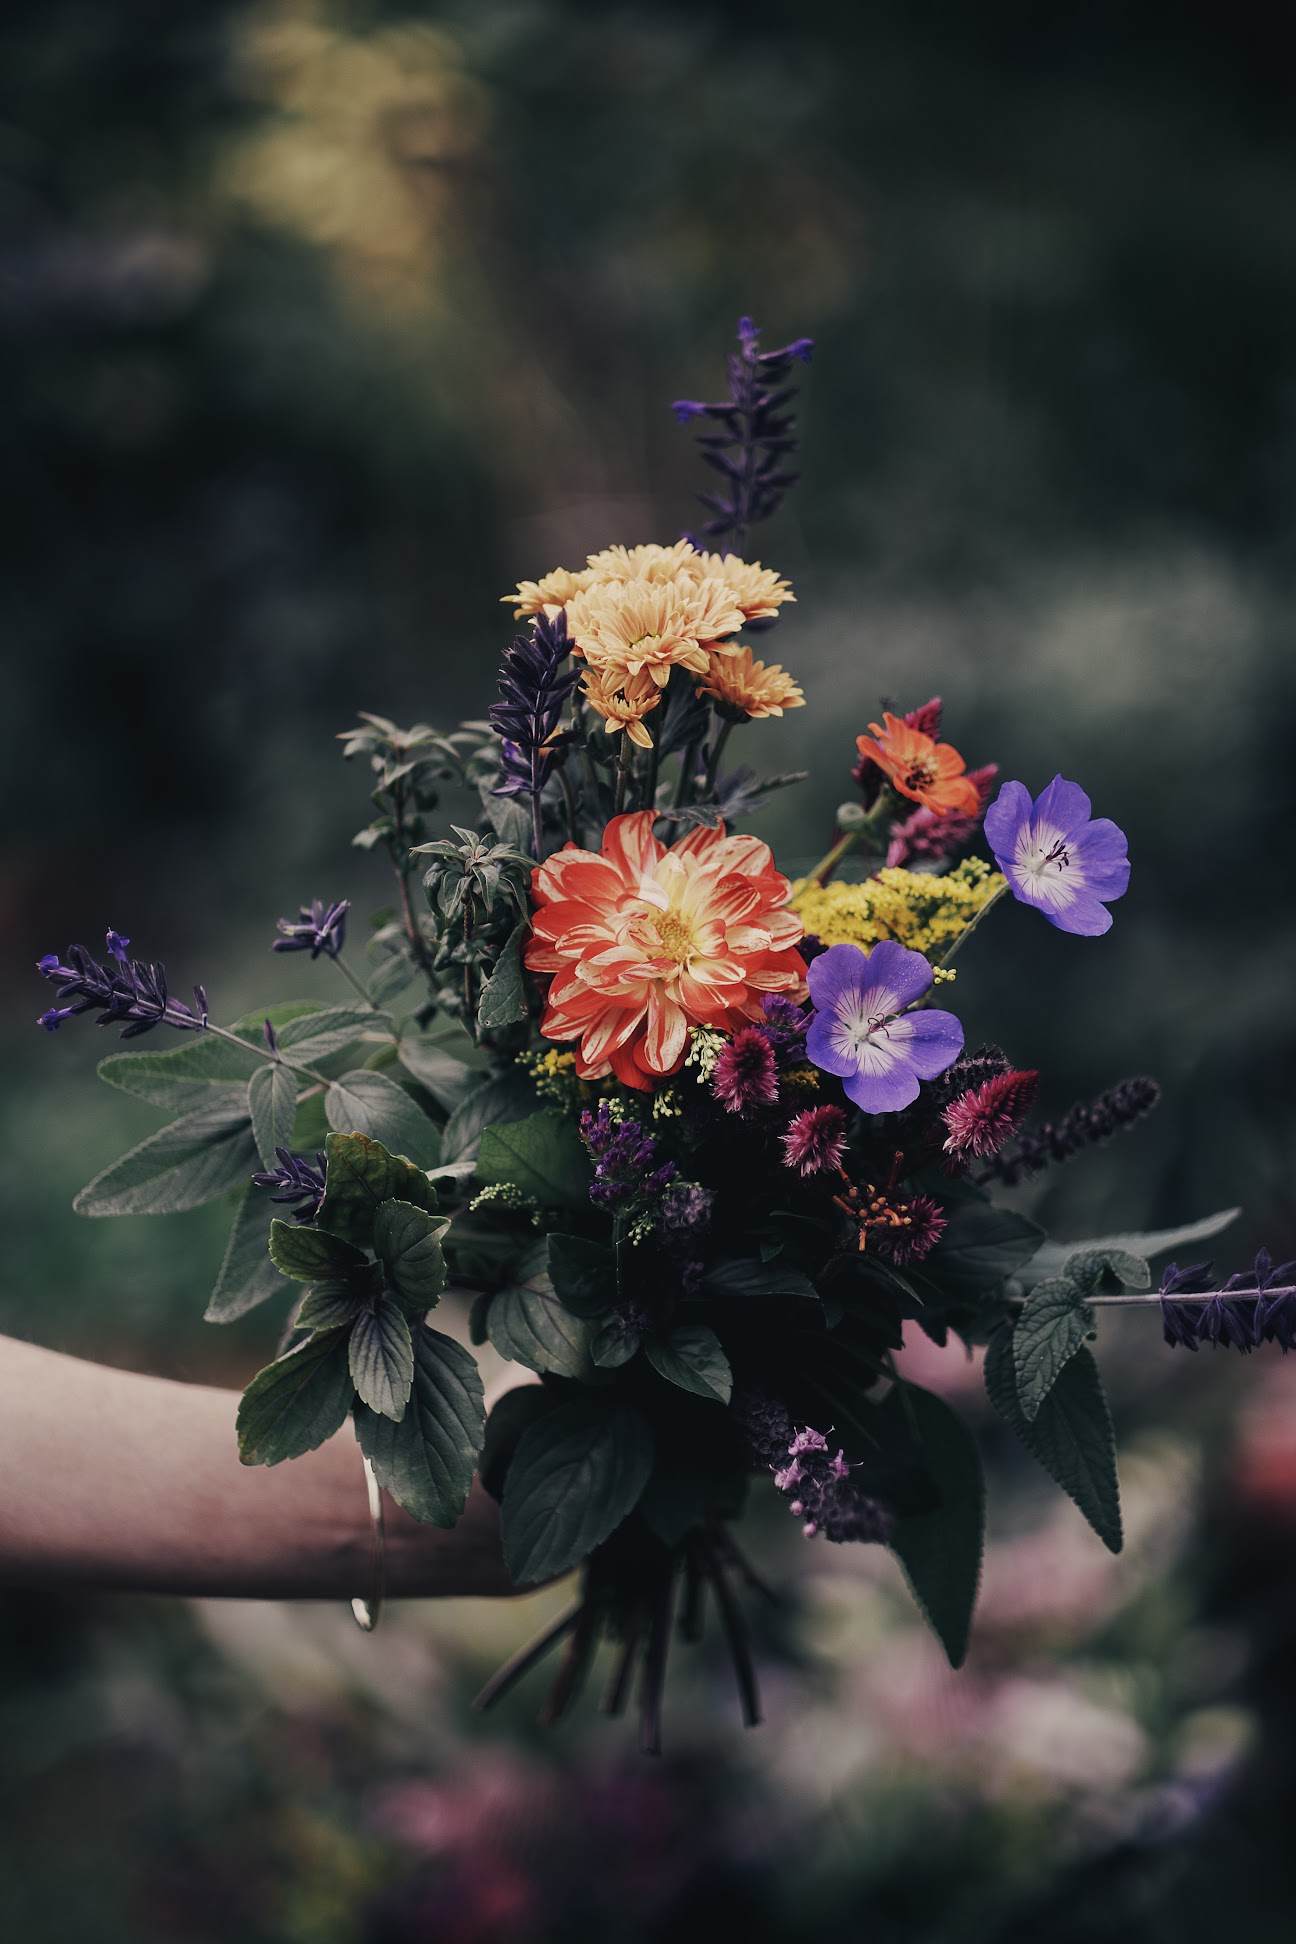 Hand holding a colourful flower arrangement.